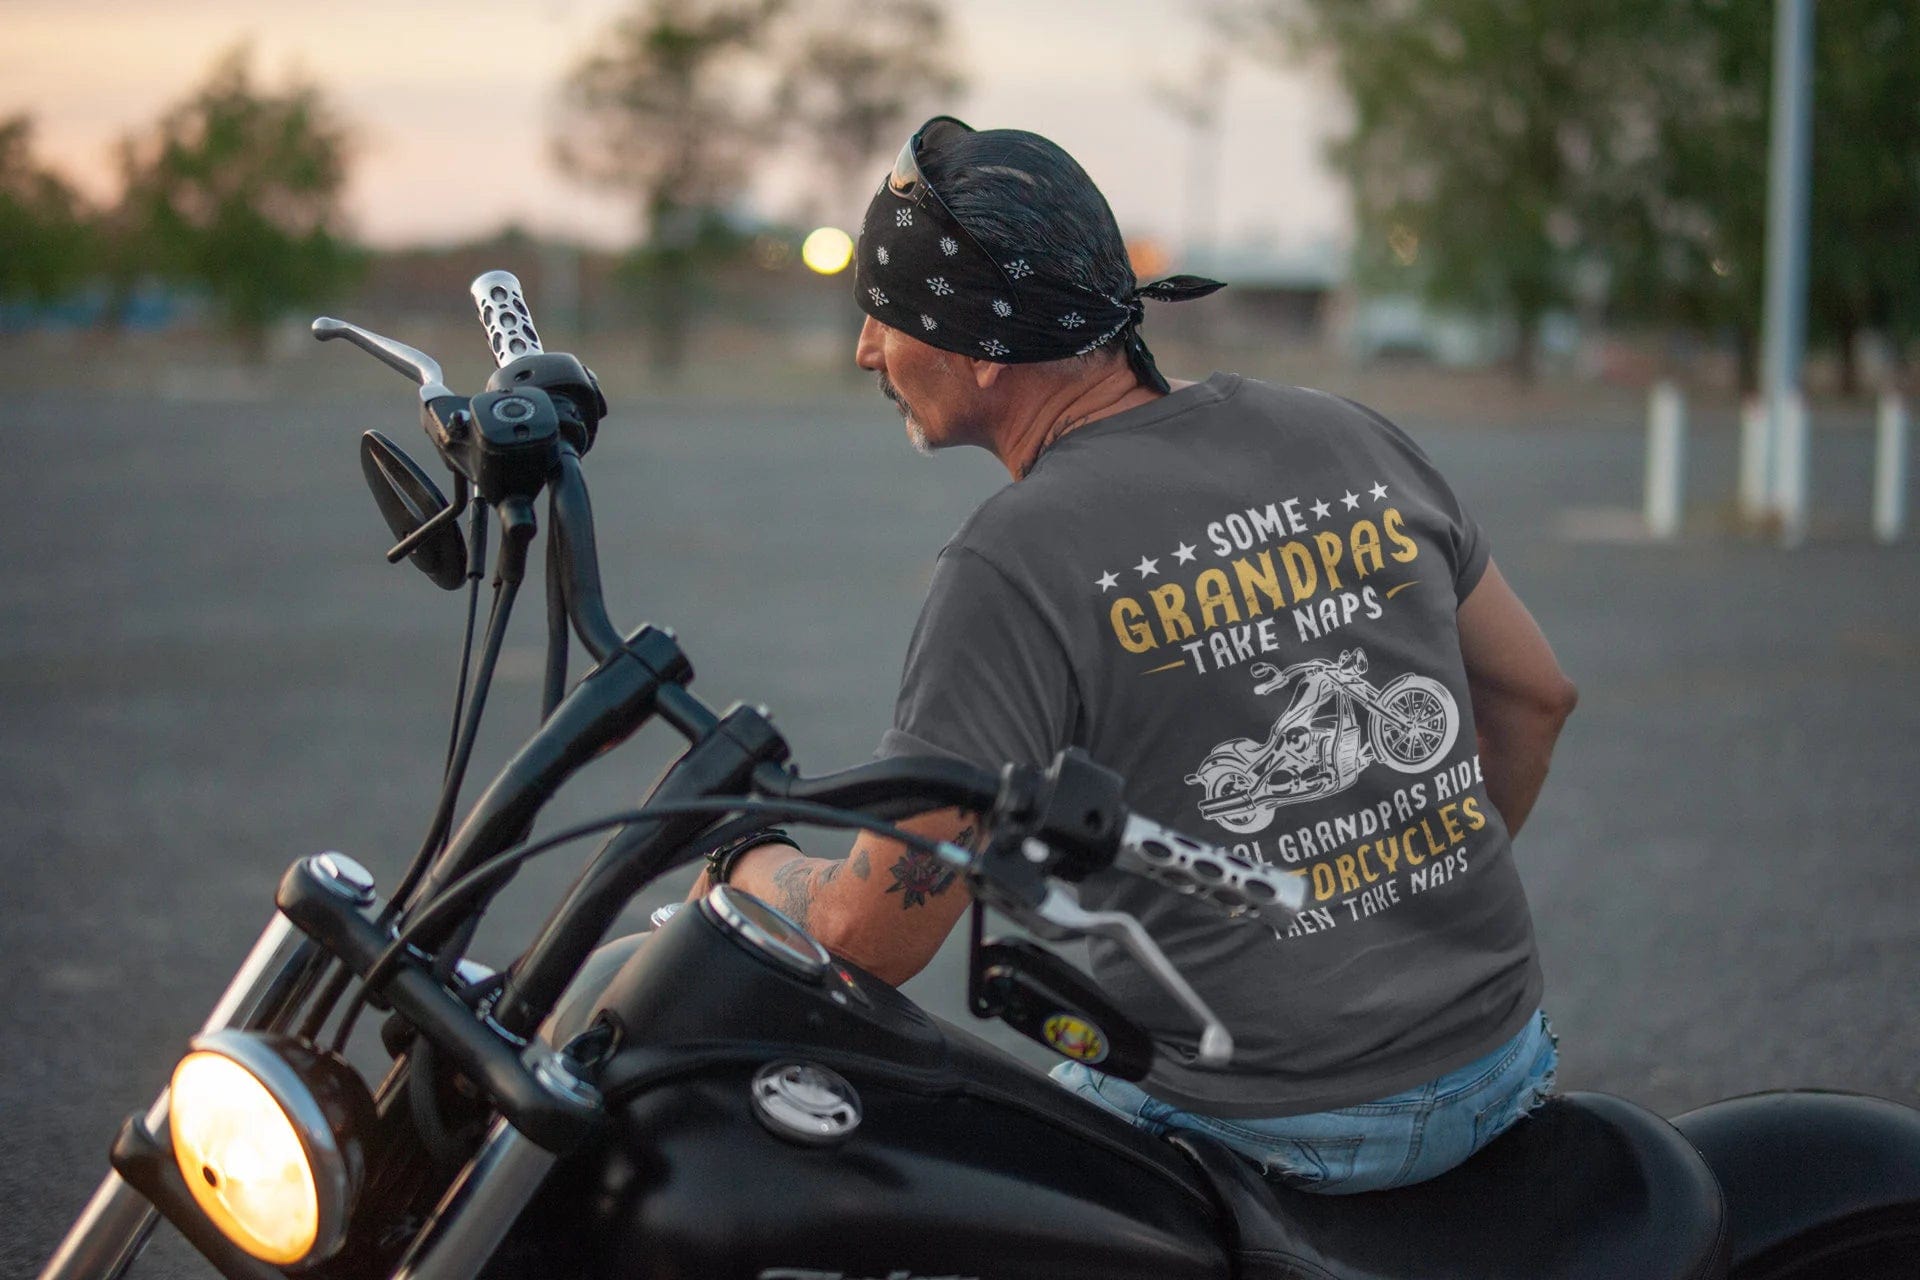 Kate McEnroe New York Biker Grandpa Shirt For Fathers day, Birthday Gift, Real Grandpas Ride Motorcycles Then Take Naps Shirt, Funny Biker Shirt, Granddad Gift 